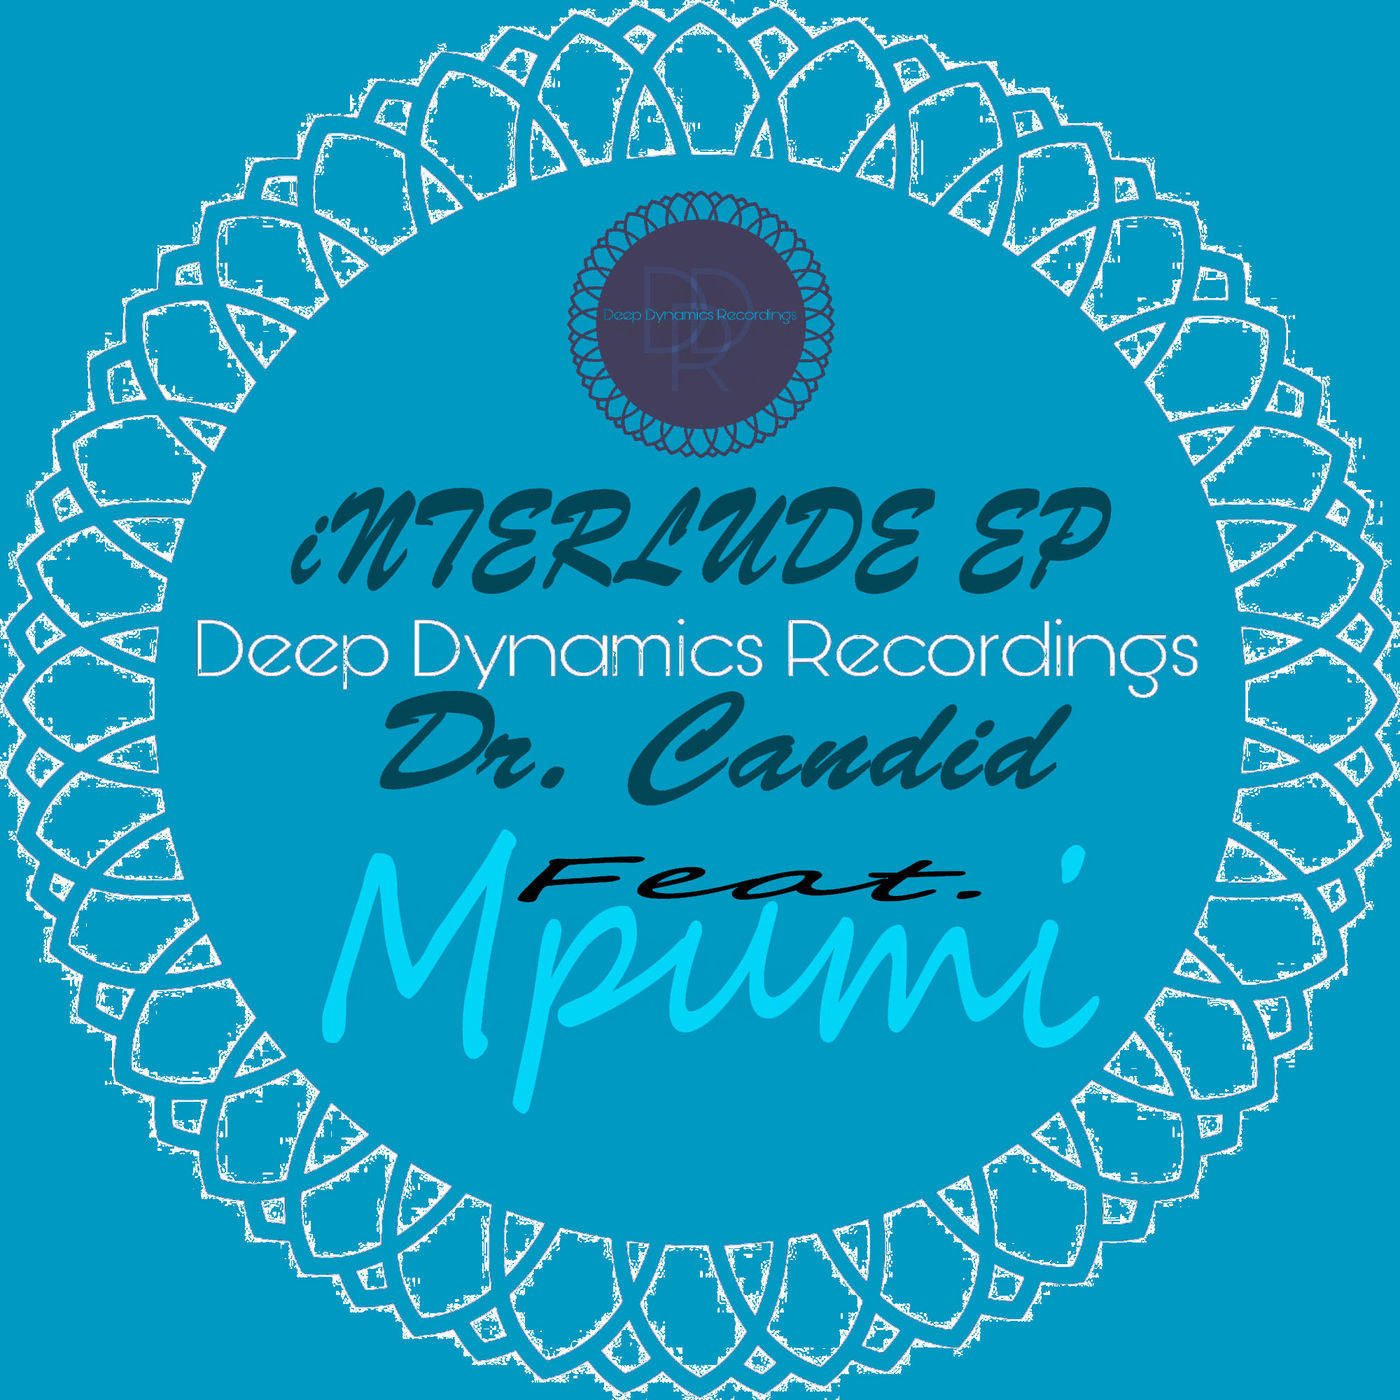 Dr. Candid - Interlude / Deep Dynamics Recordings